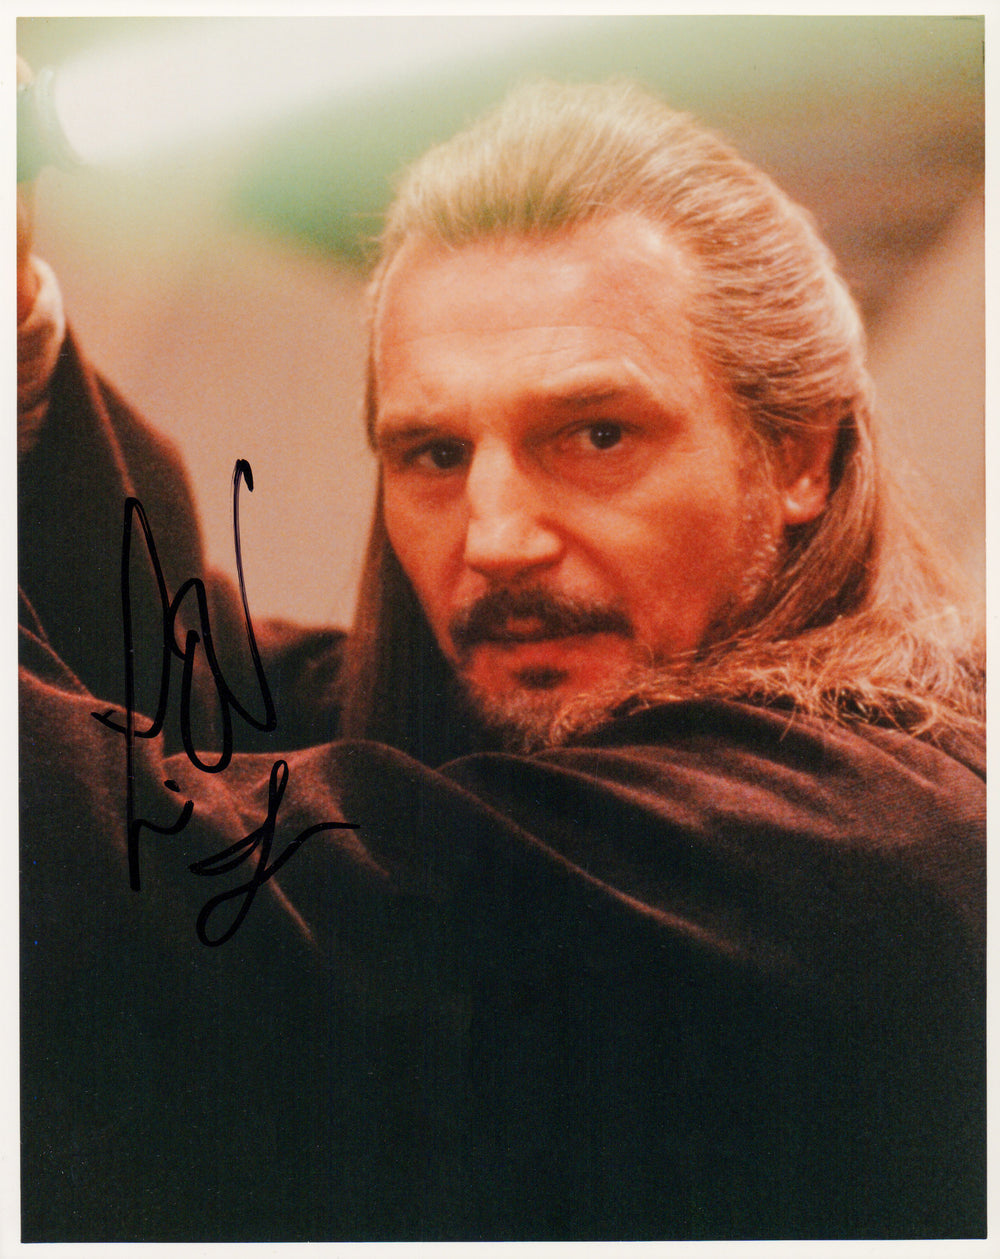 Liam Neeson as Qui-Gon Jinn in Star Wars Episode I: The Phantom Menace Signed 8x10 Photo